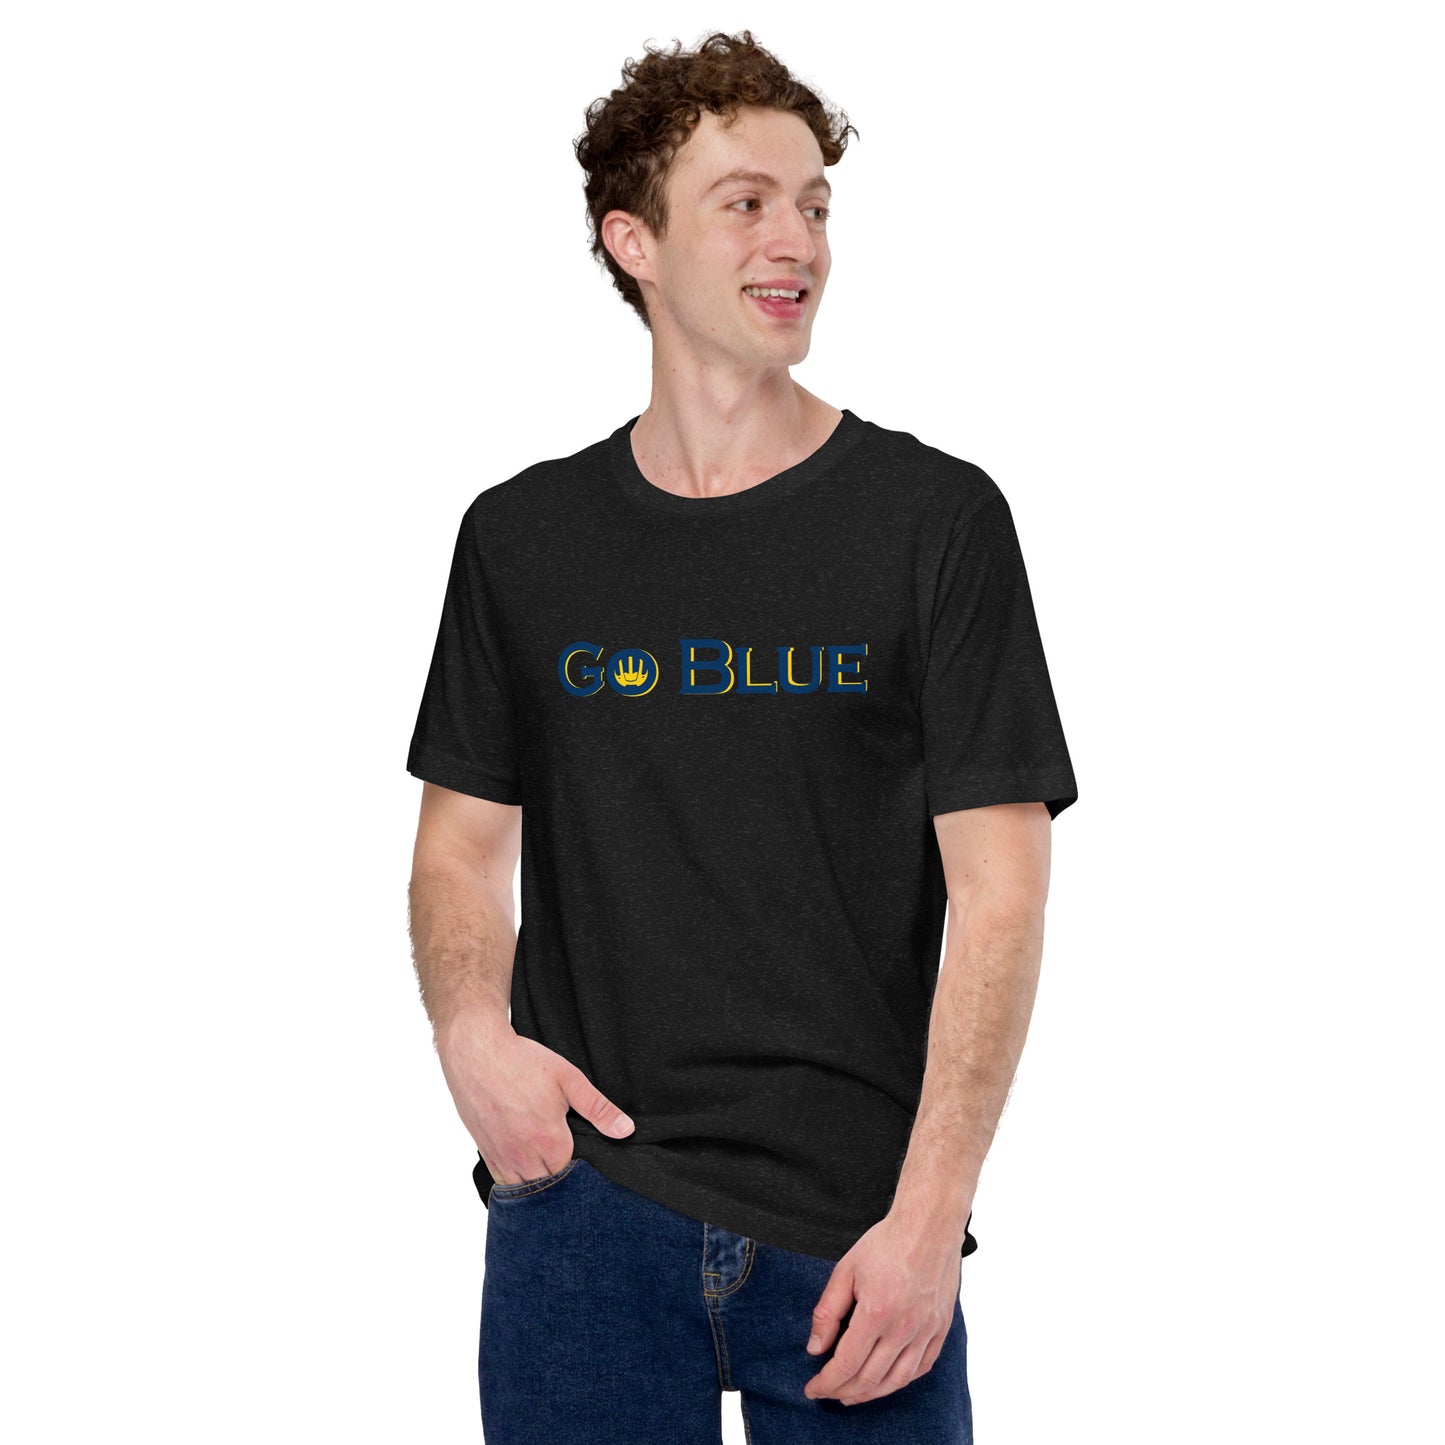 Go Blue Unisex Structured T-Shirt